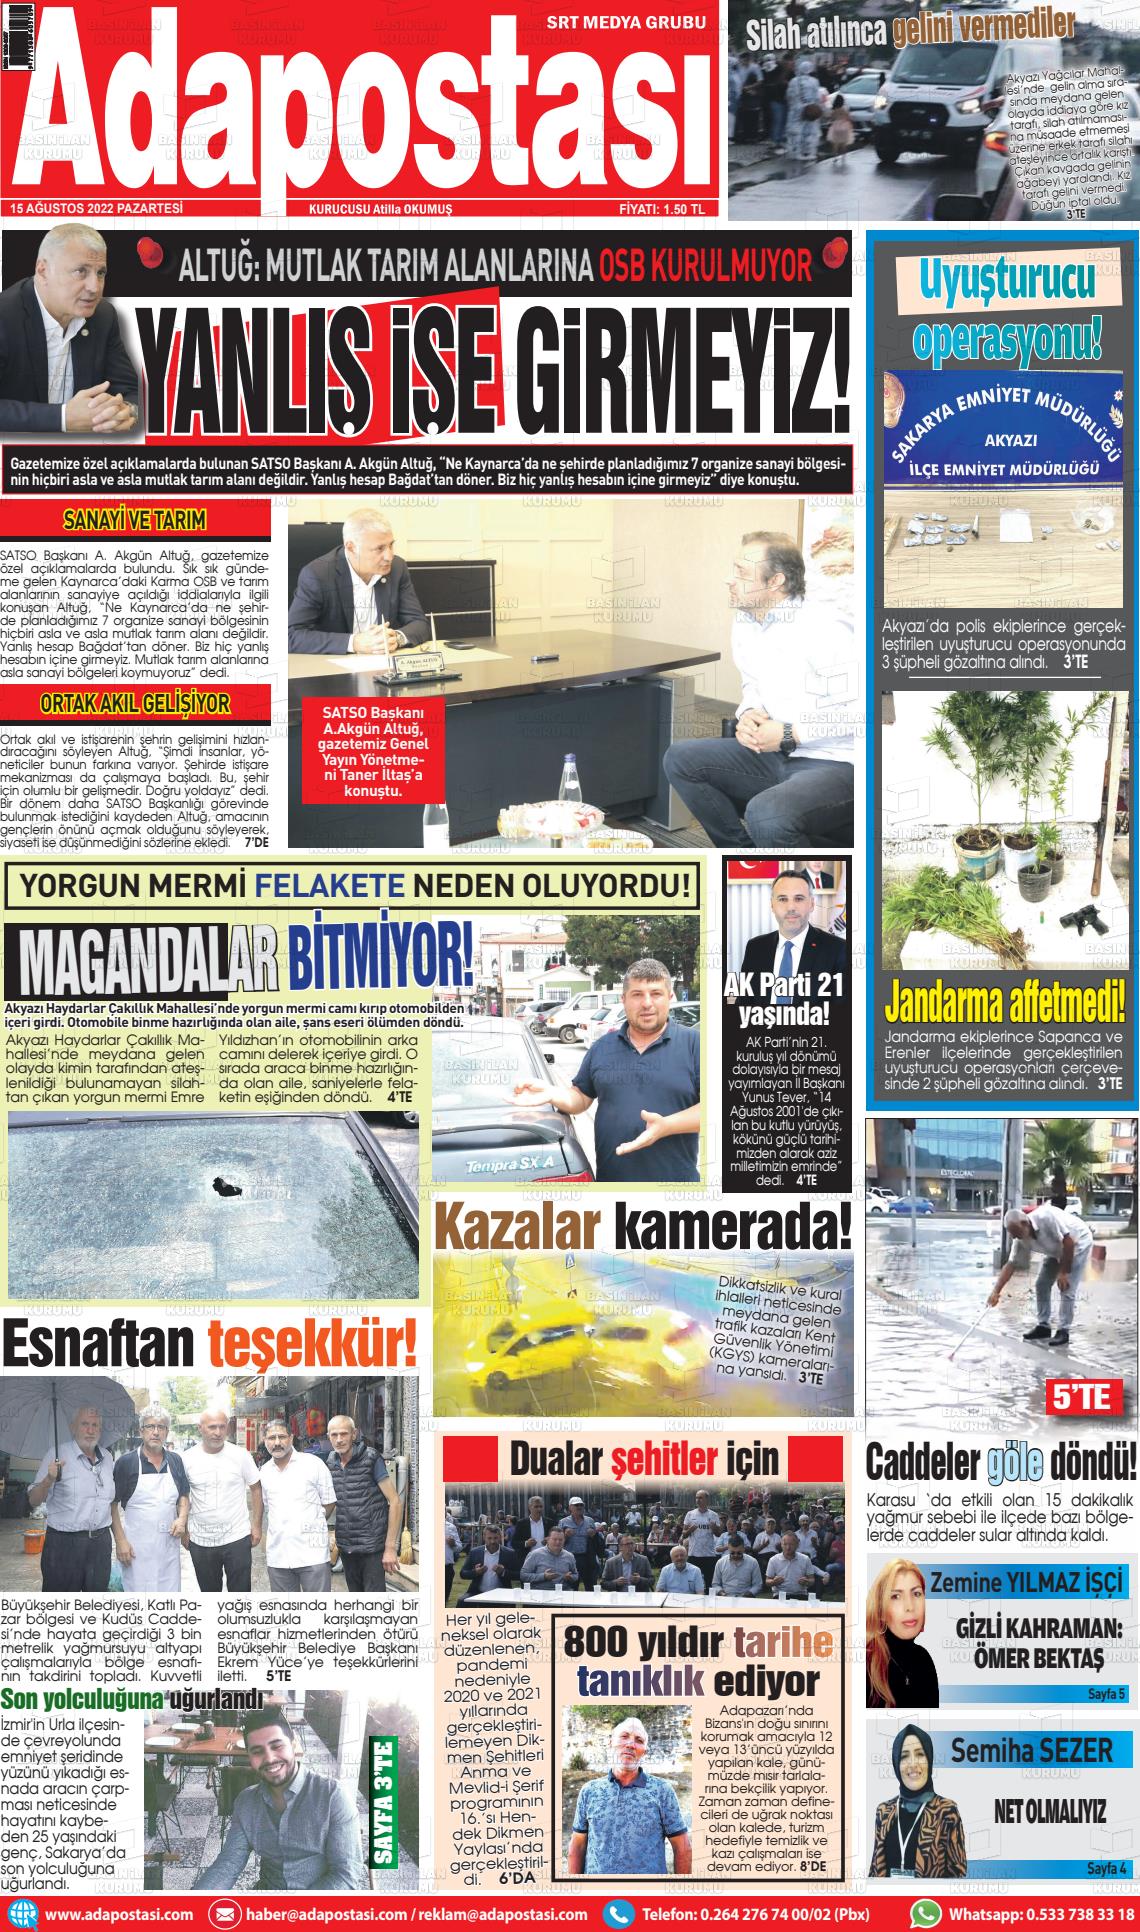 15 Ağustos 2022 Ada Postası Gazete Manşeti